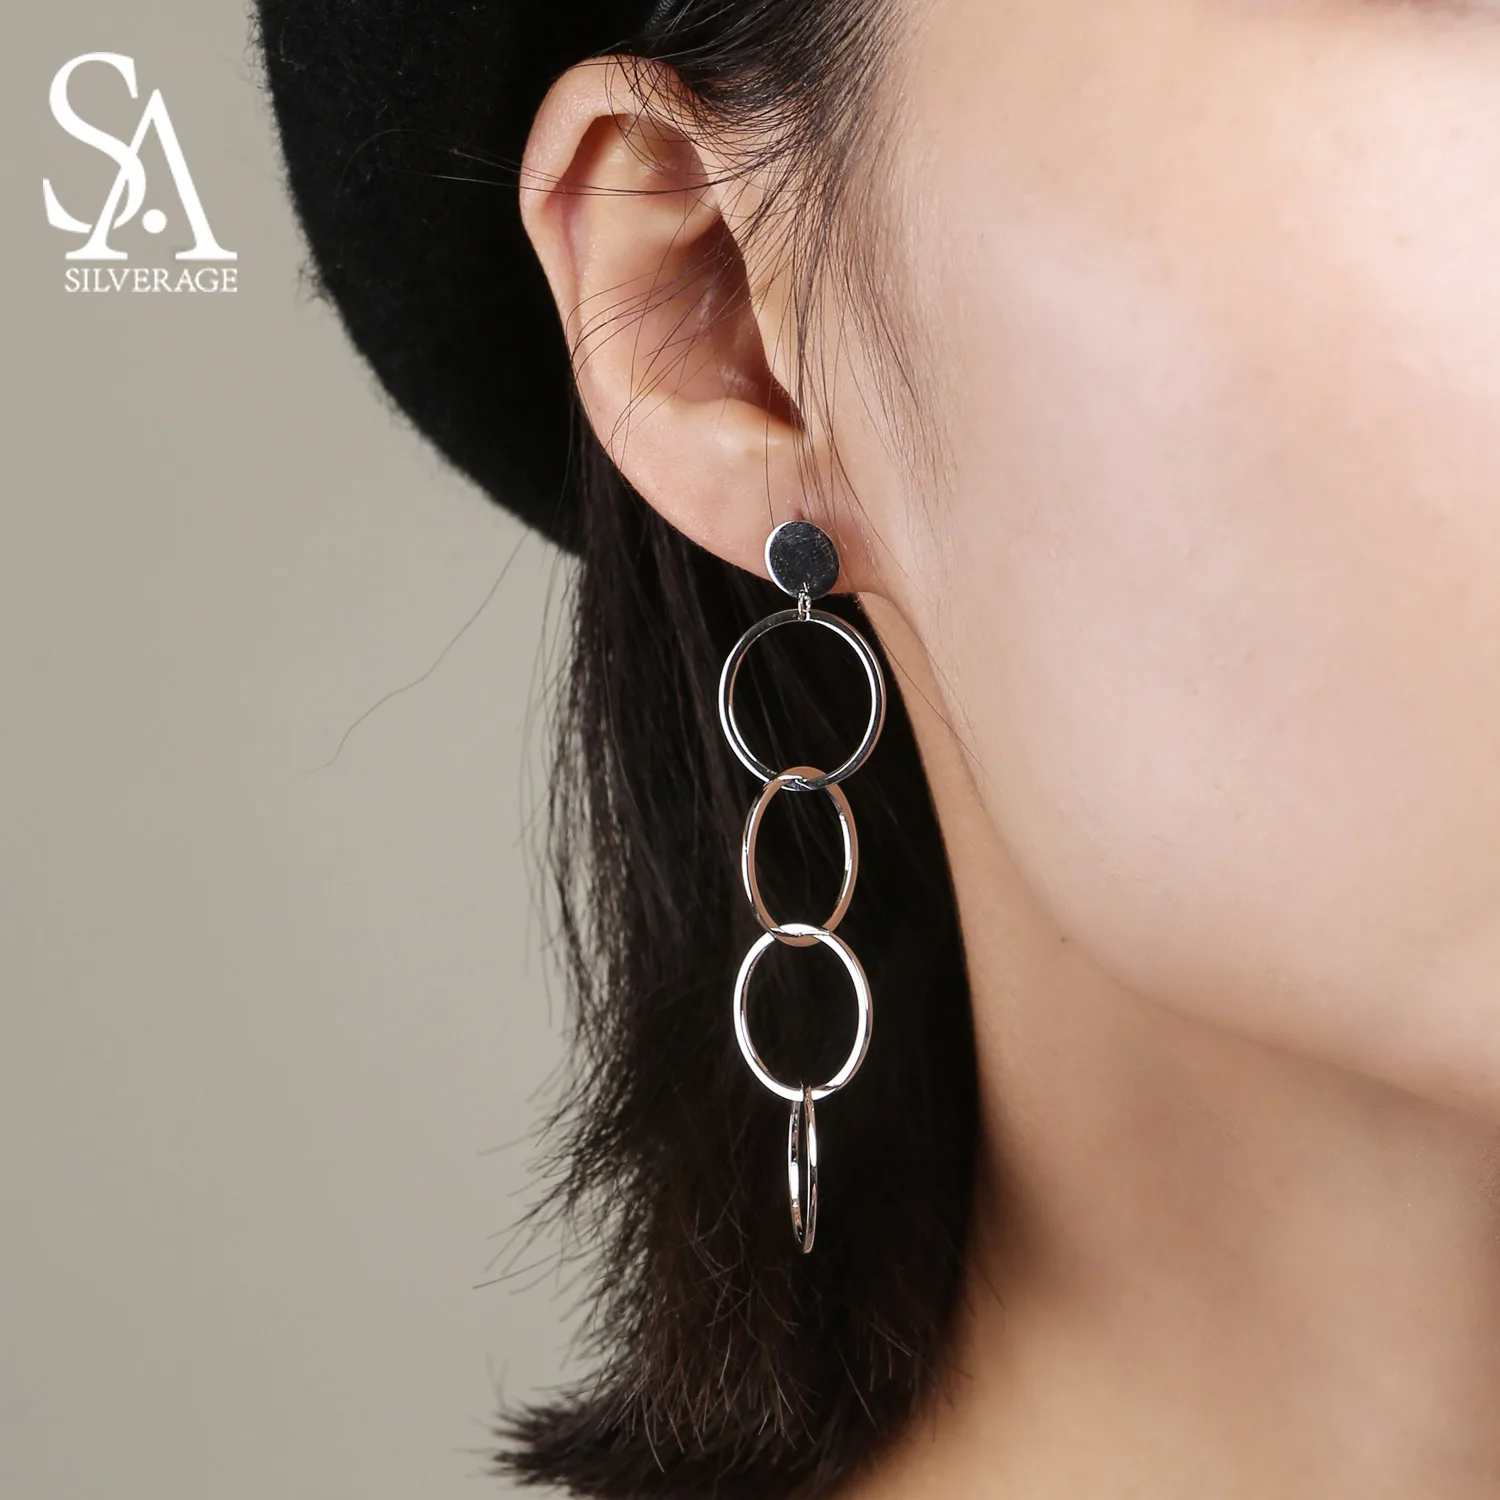 SA SILVERAGE 925 пробы серебро круглой формы серьги для Для женщин дизайнер 925 пробы серебряные круглые серьги Мода